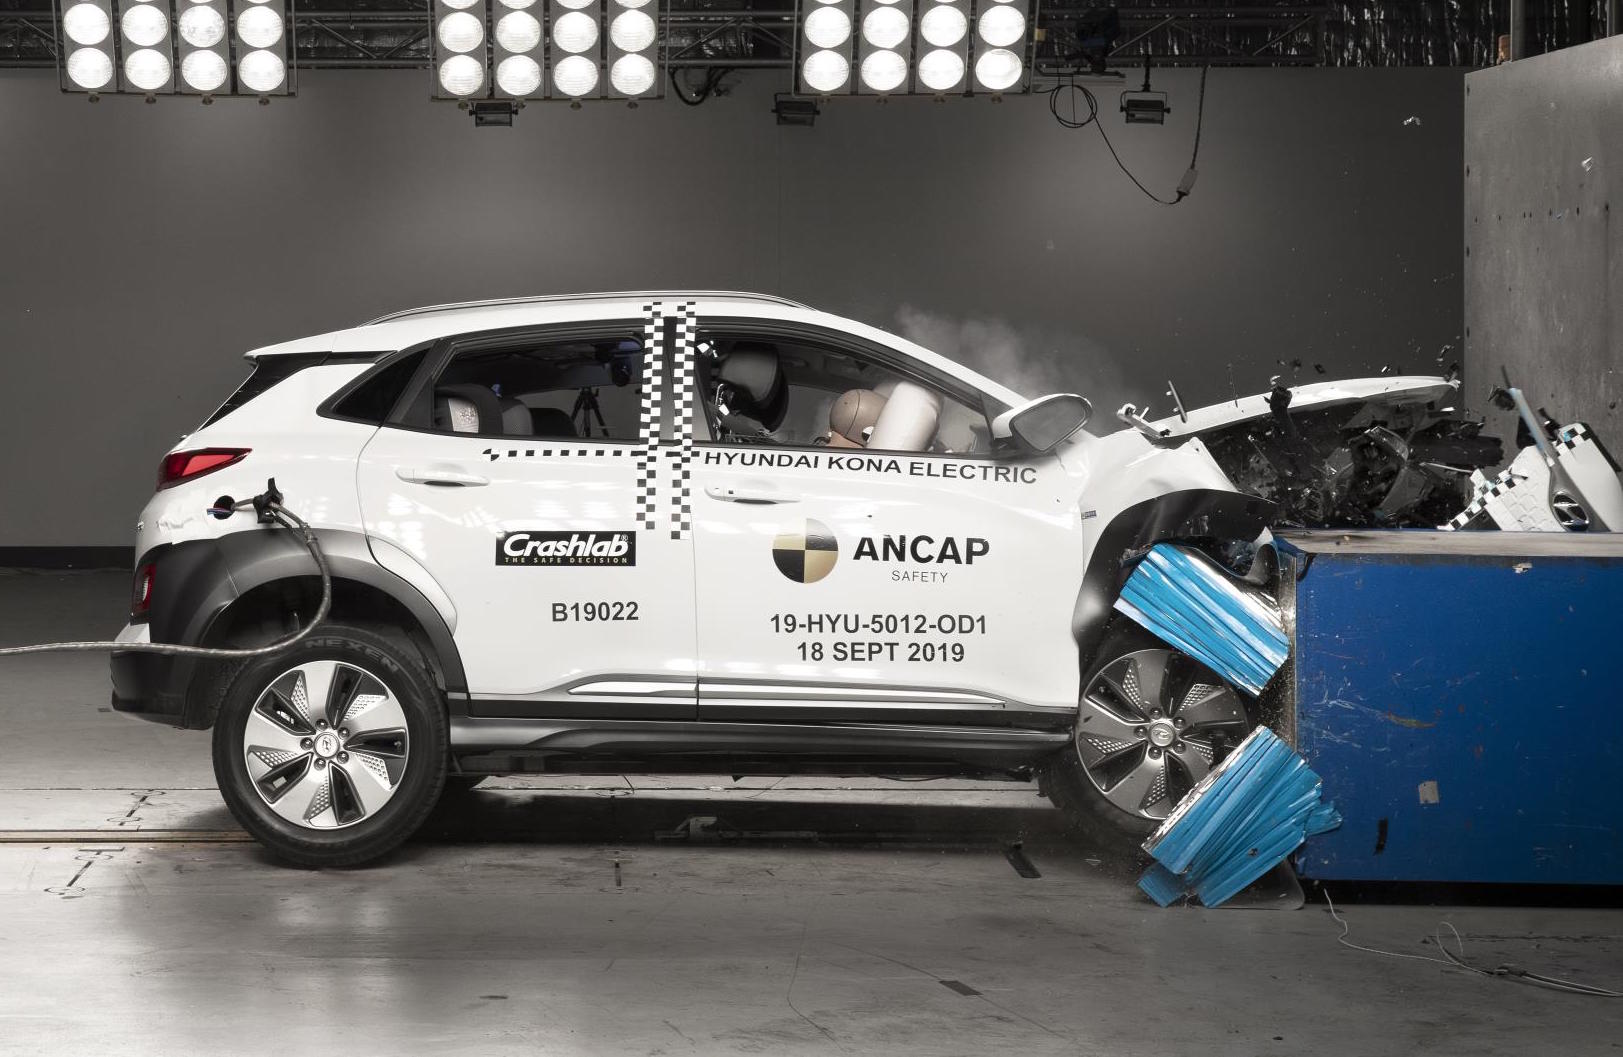 Hyundai Kona Electric earns 5star ANCAP safety, first EV crash tested